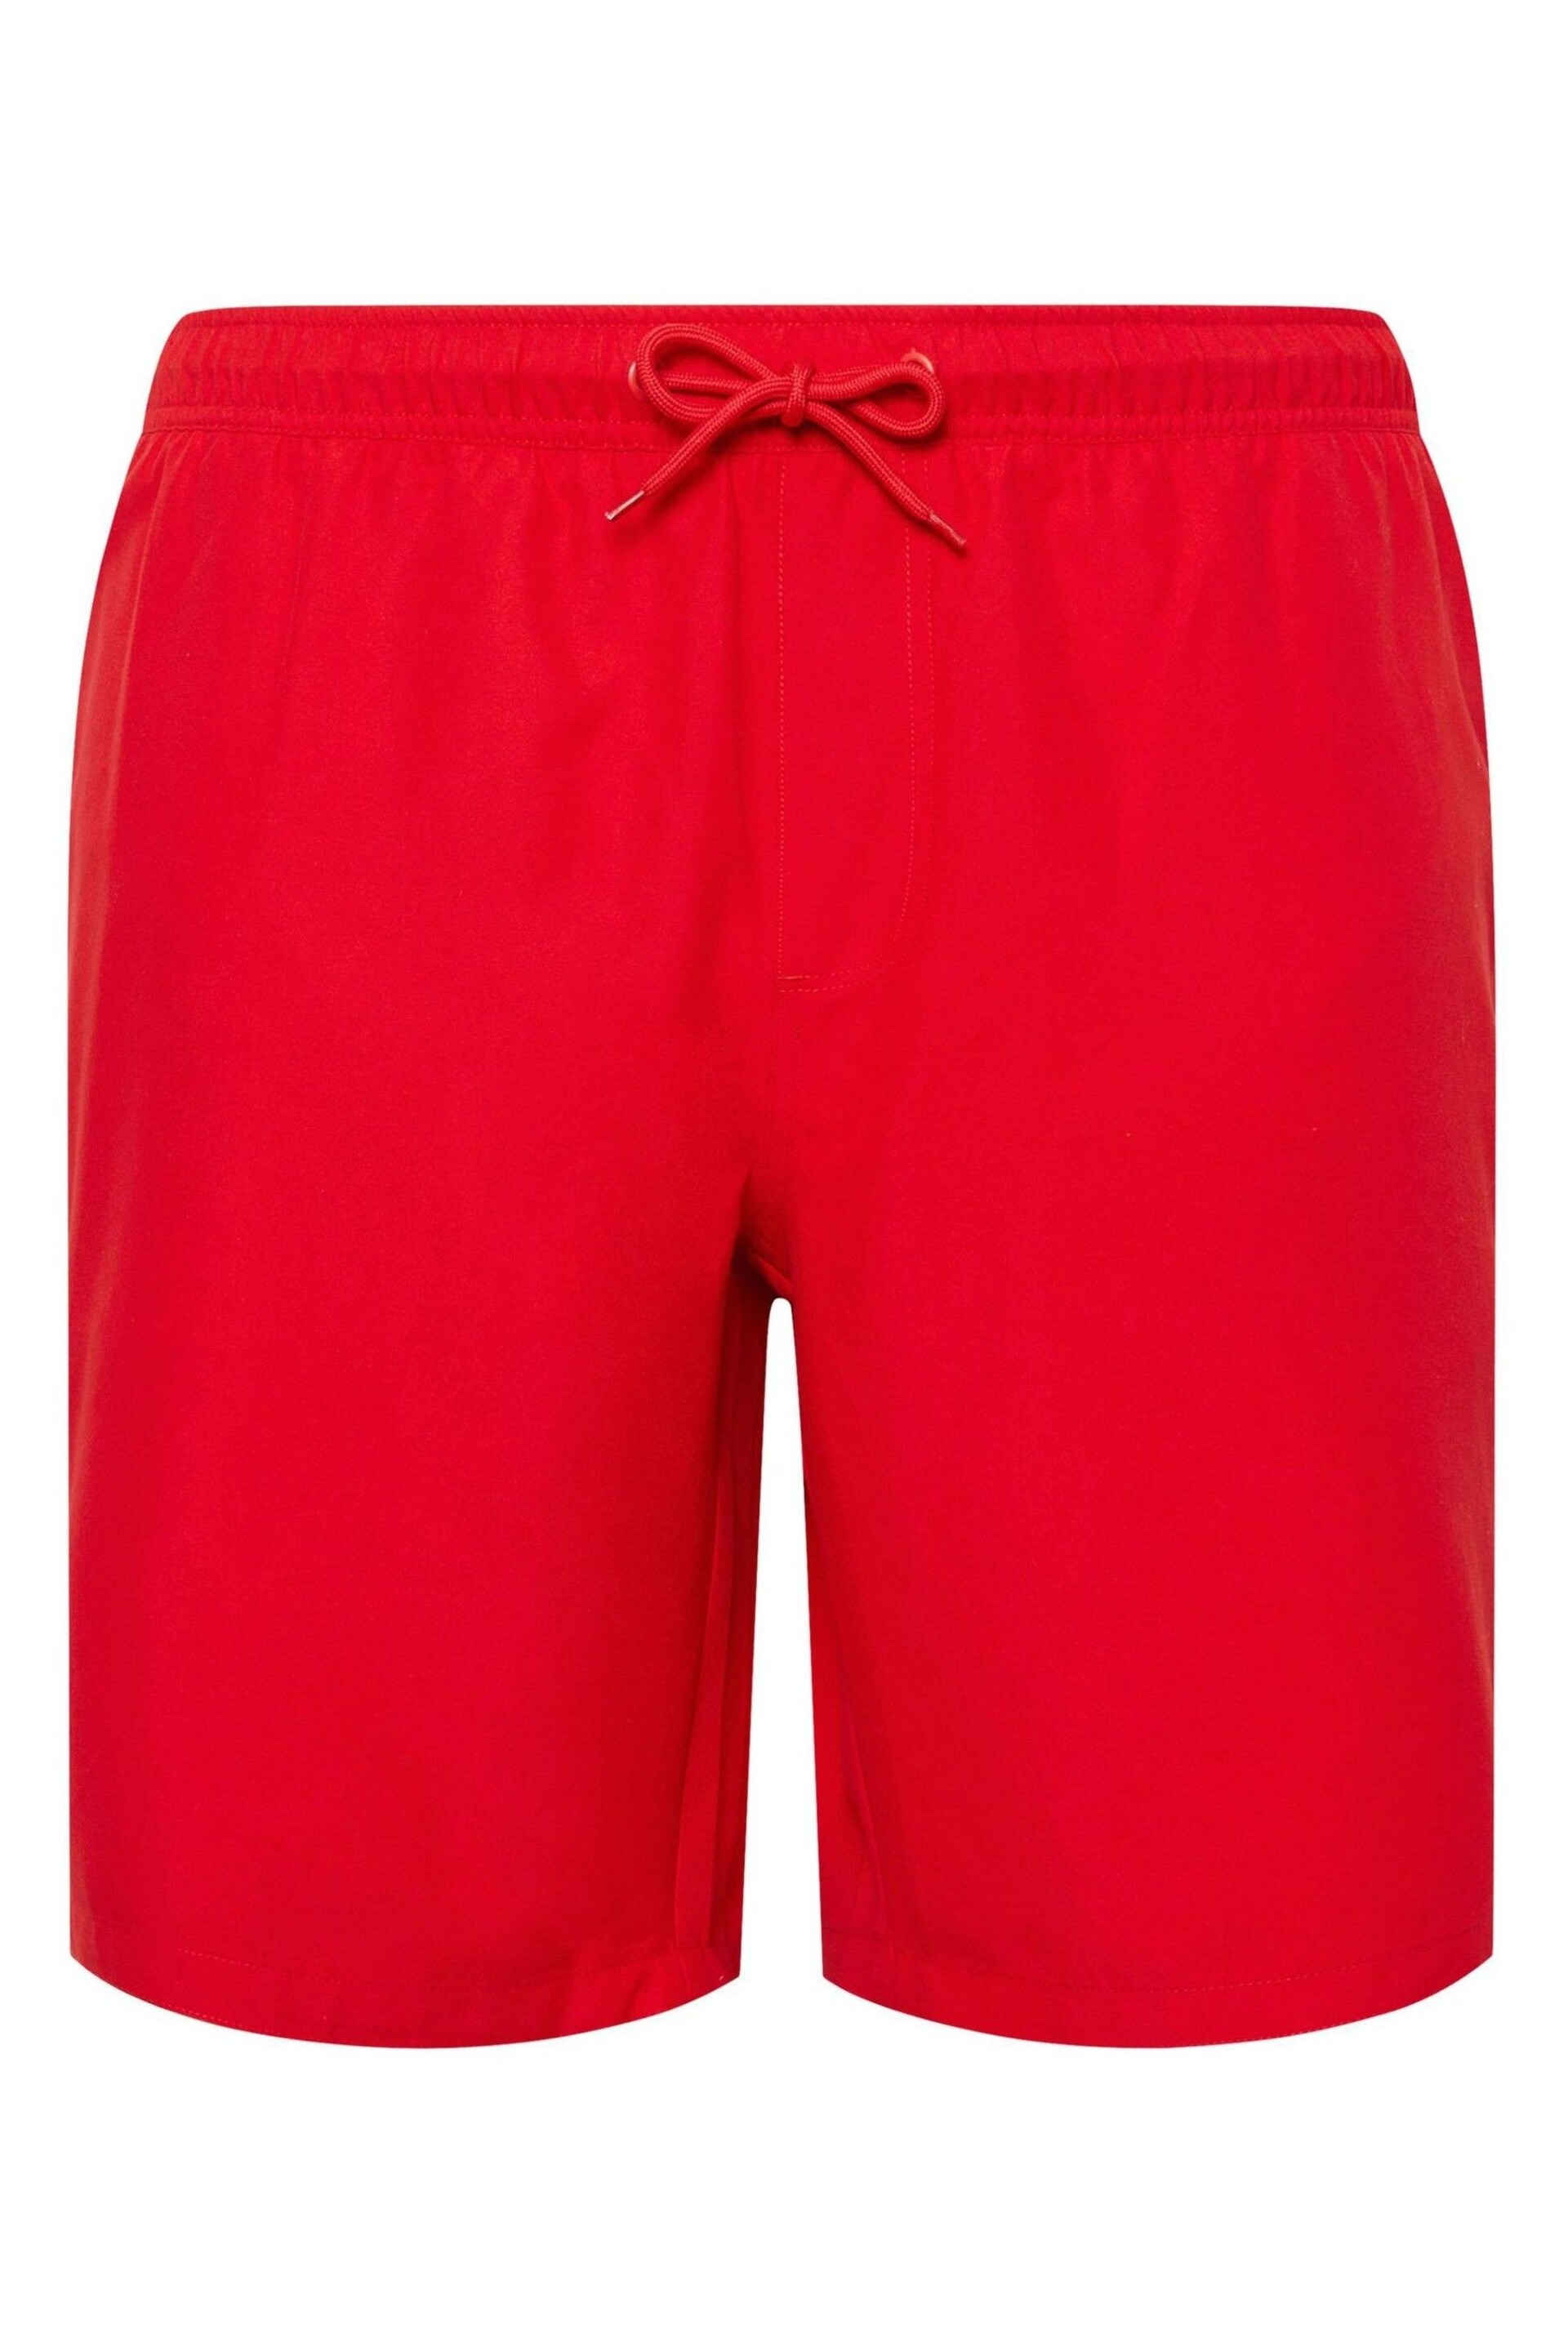 BadRhino Big & Tall Red Plain Swim Shorts - Image 3 of 4